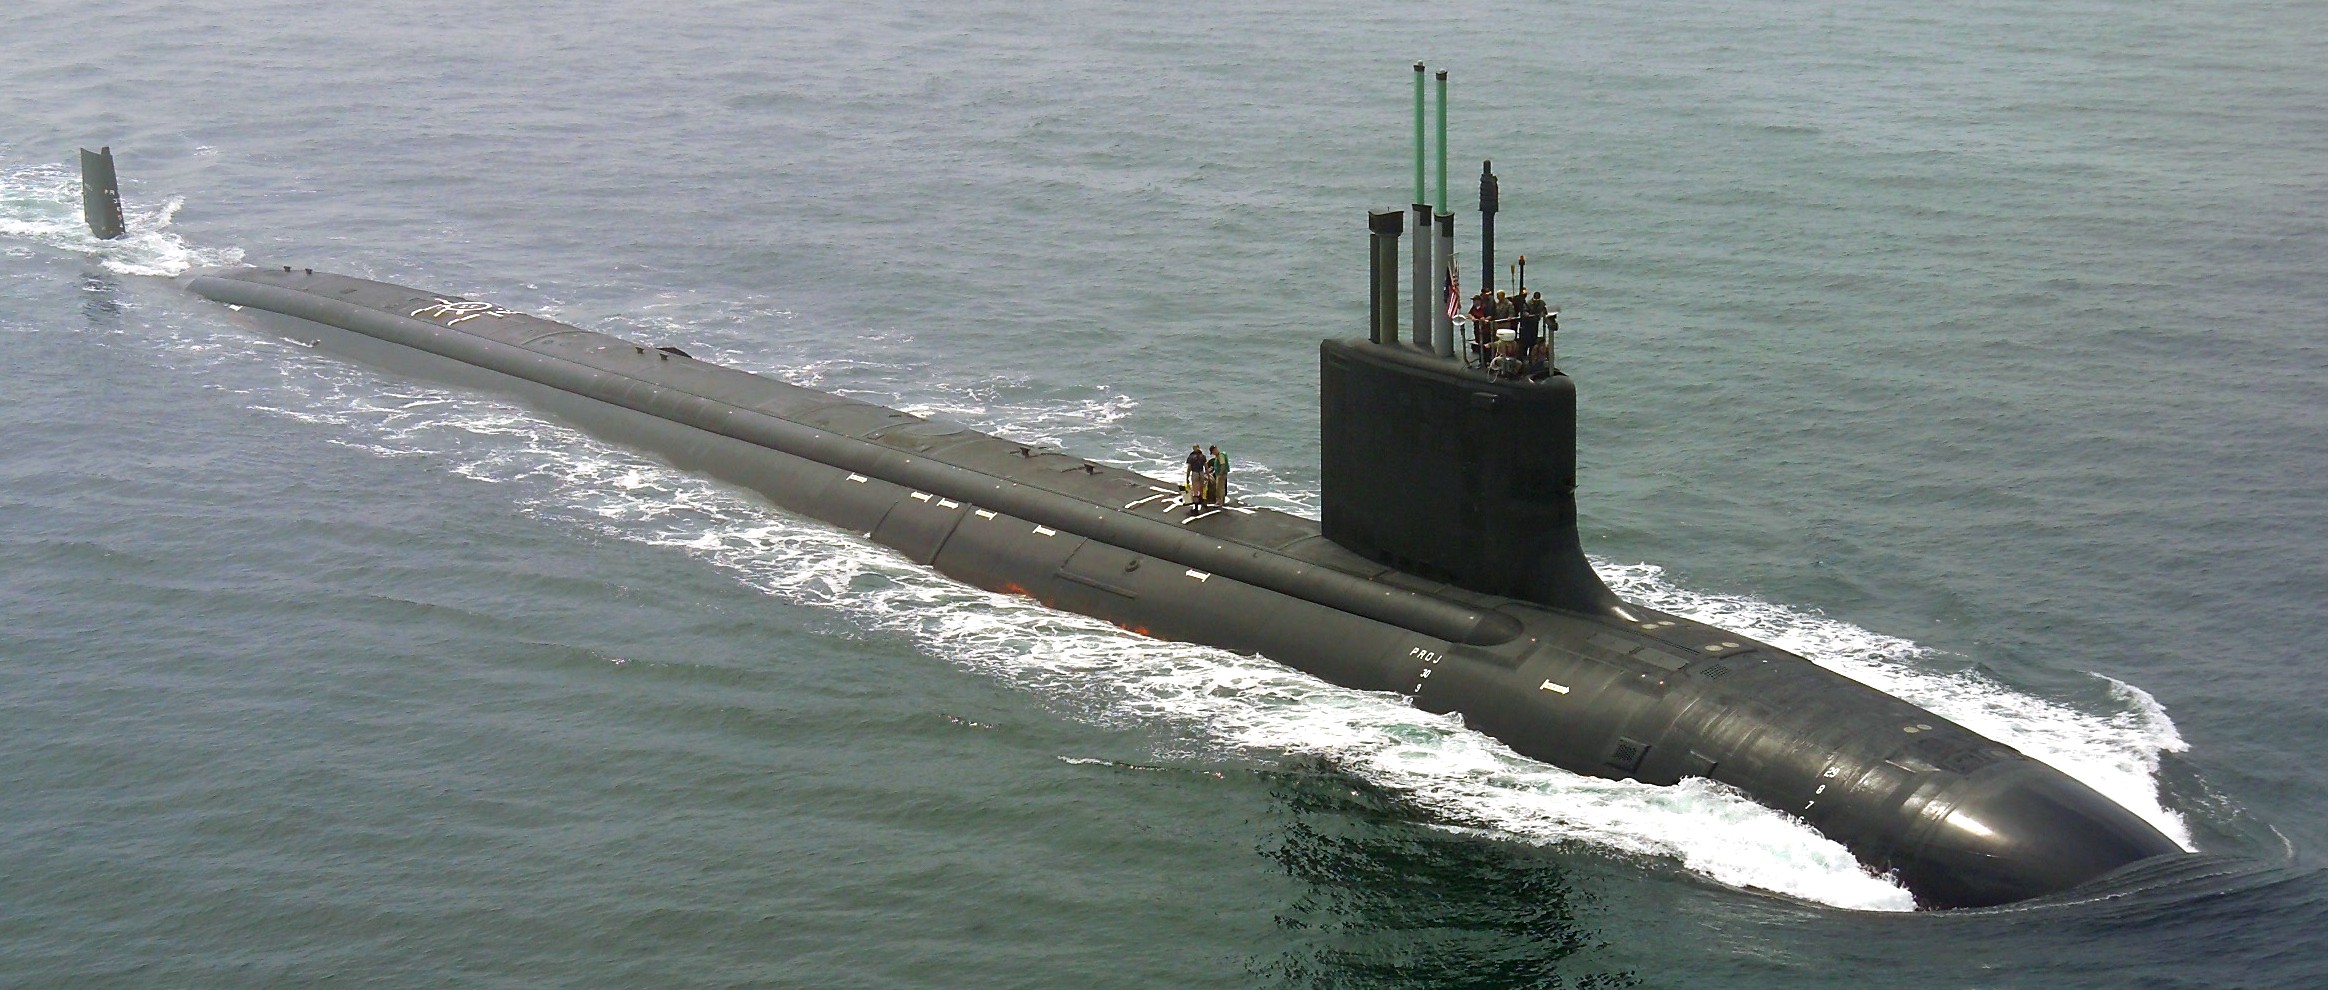 ssn-774 uss virginia attack submarine us navy base groton connecticut gdeb